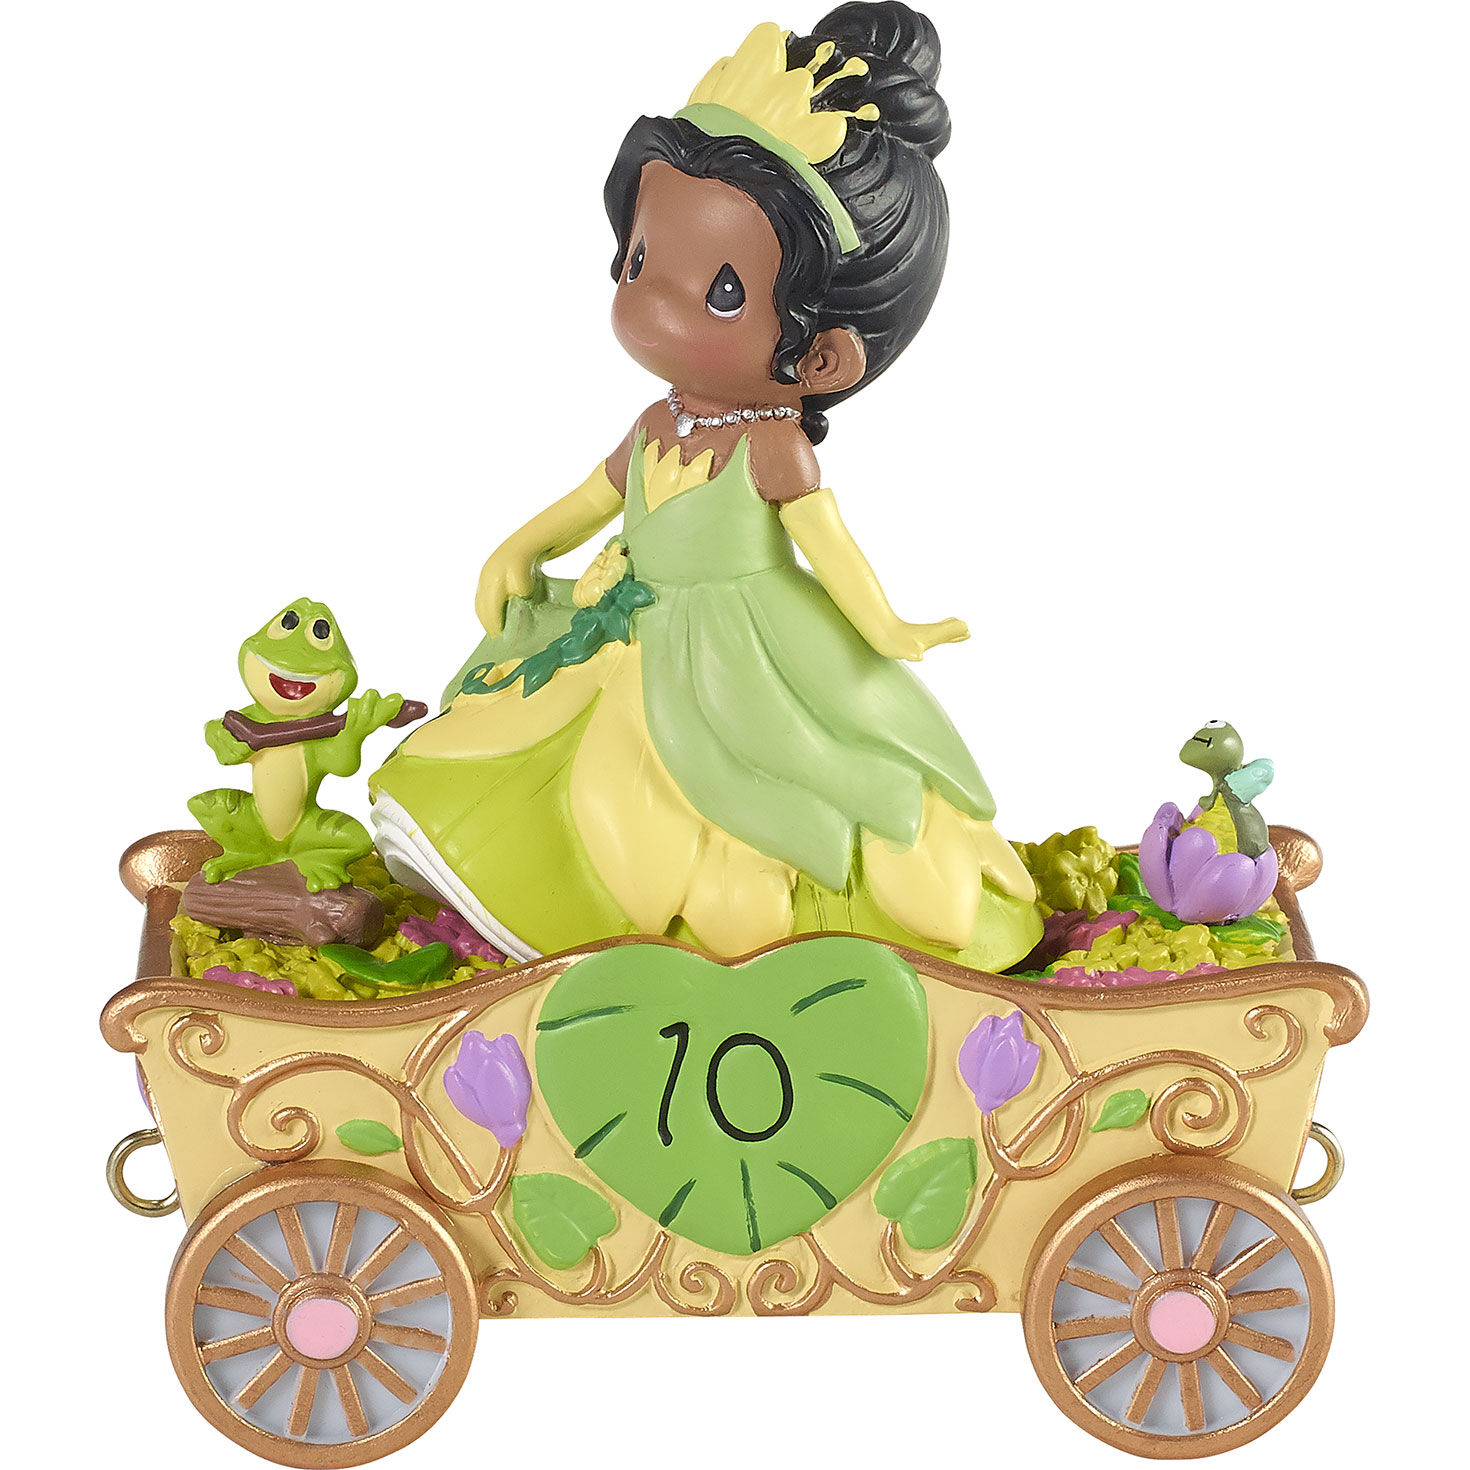 Precious Moments Disney Tiana Figurine, Age 10 for only USD 35.99 | Hallmark